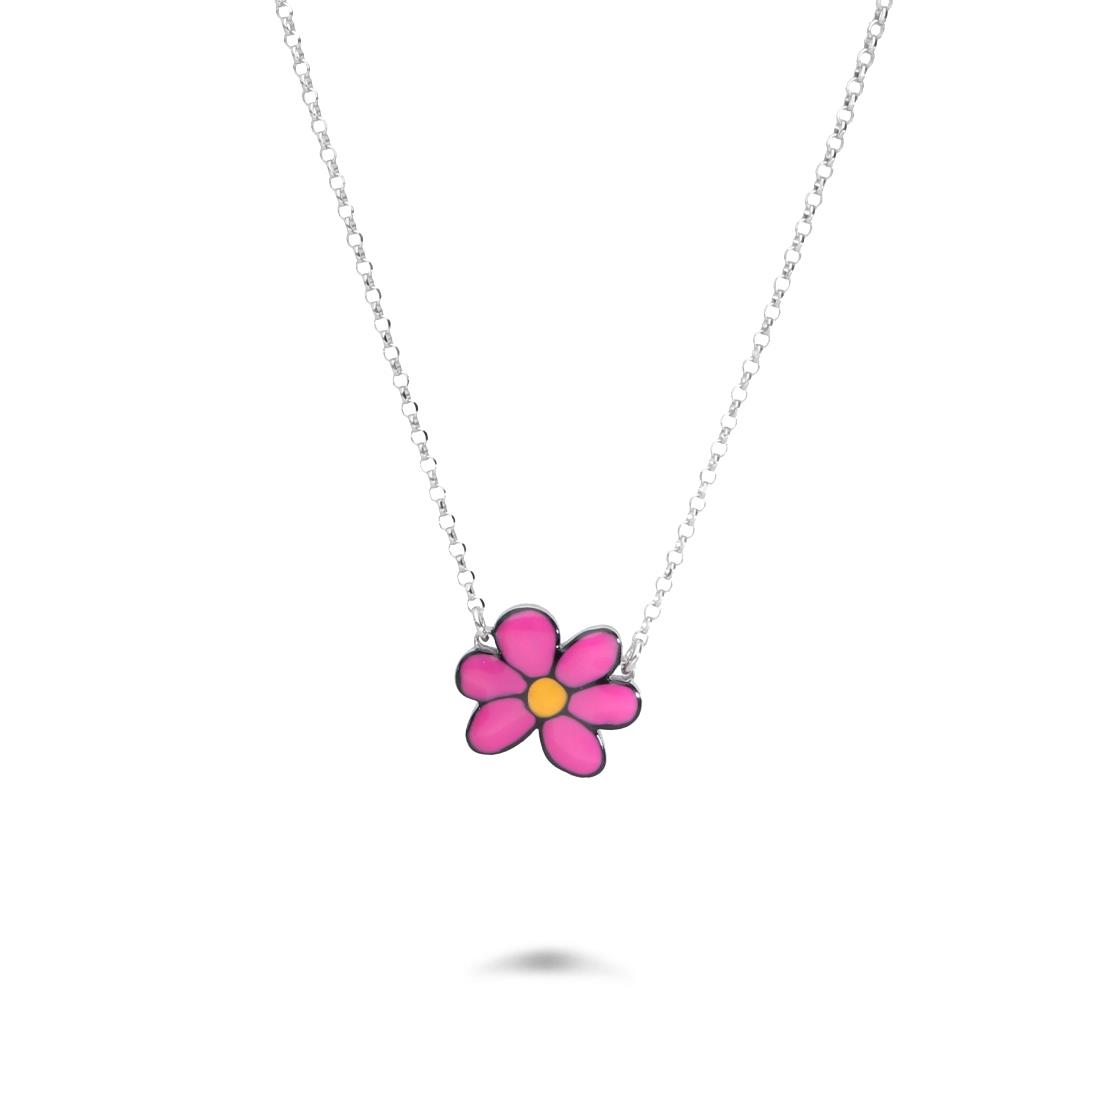 Silver necklace with fuchsia daisy - GURU